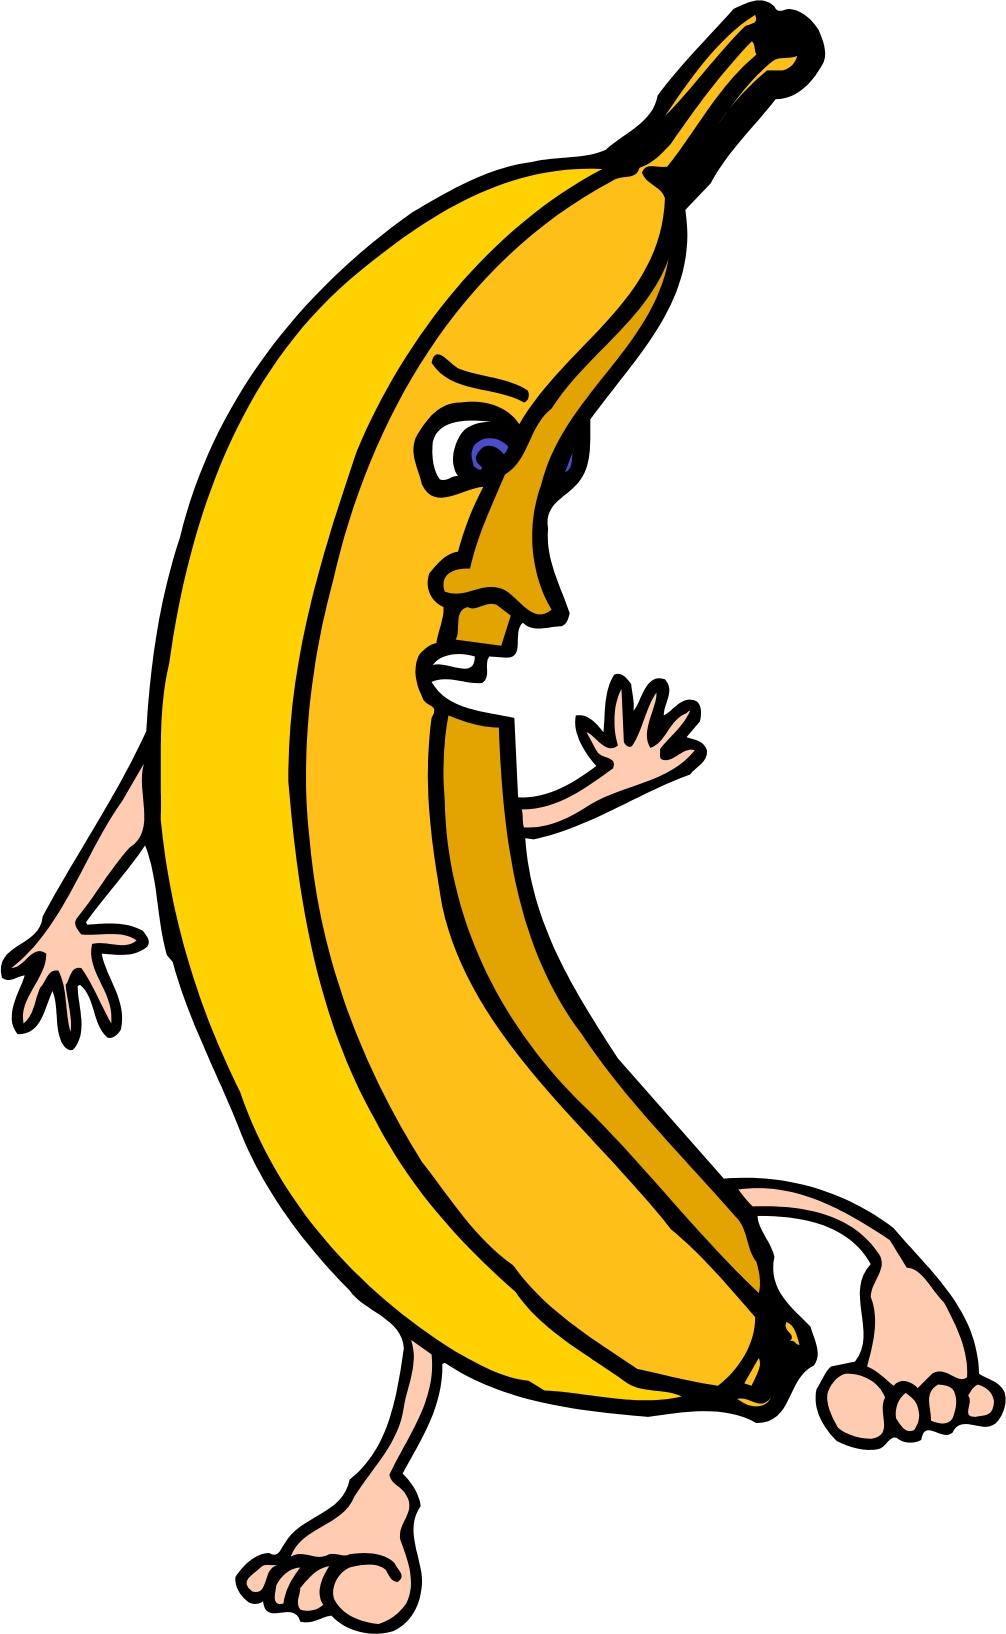 Free Cartoon Banana Image, Download Free Clip Art, Free